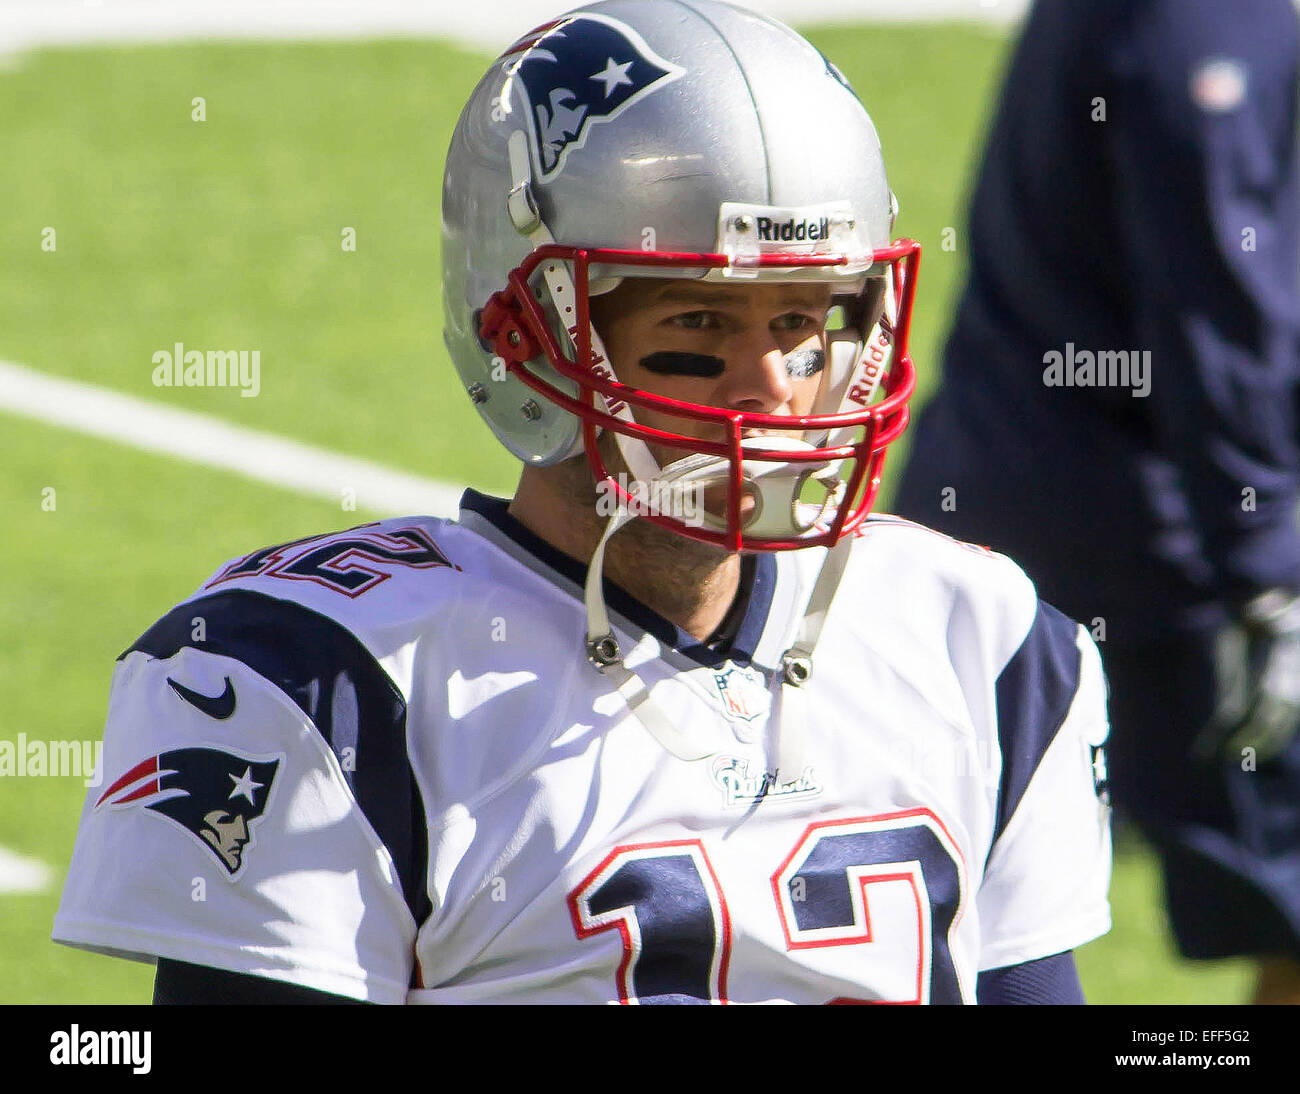 New England Patriots quarterback Tom Brady während der Pre-game Warm-ups MetLife Stadium New Jersey USA am Oktober 2013 Stockfoto